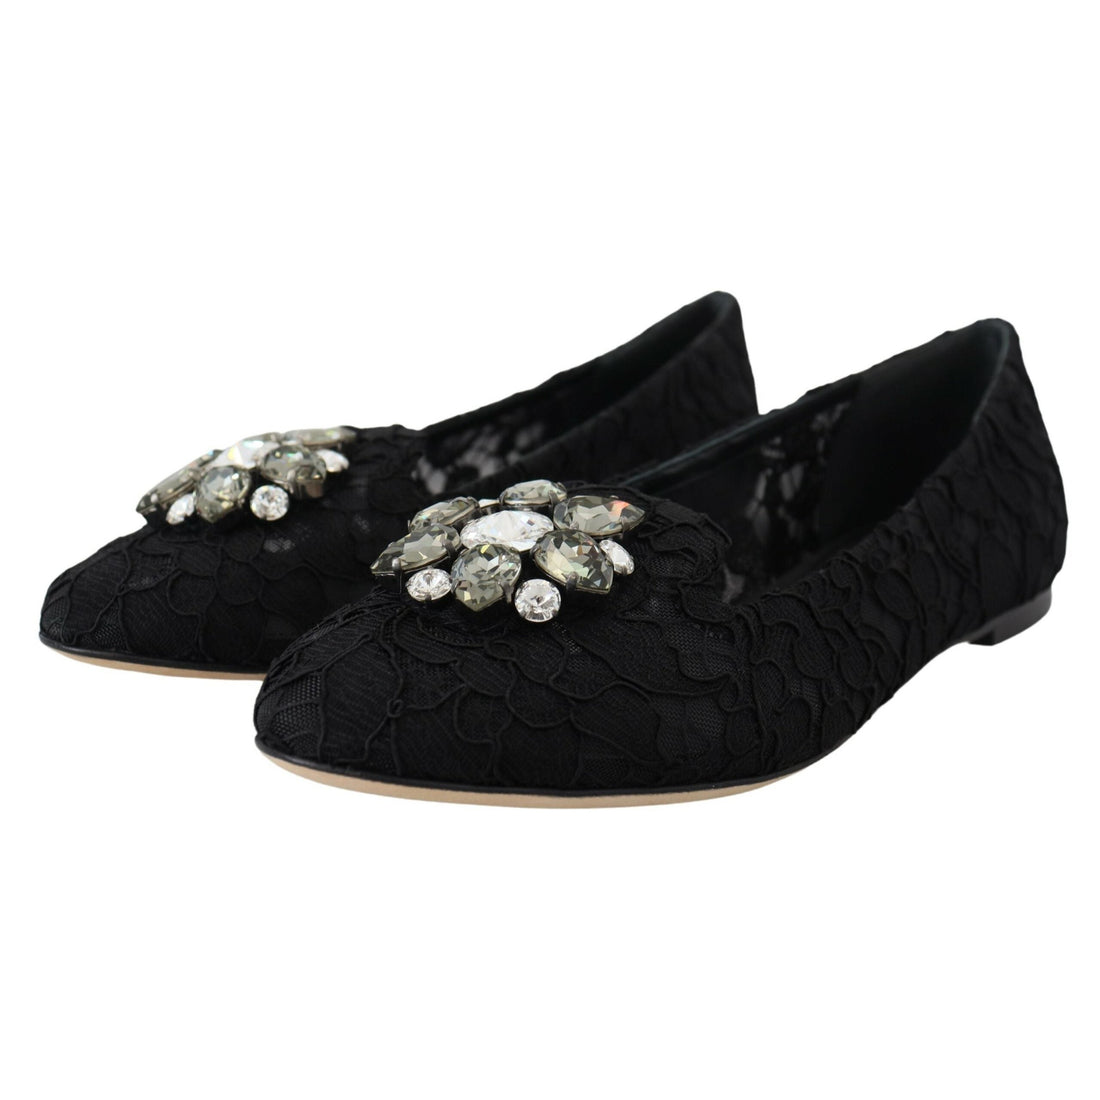 Dolce & Gabbana Black Taormina Lace Crystals Flats Shoes